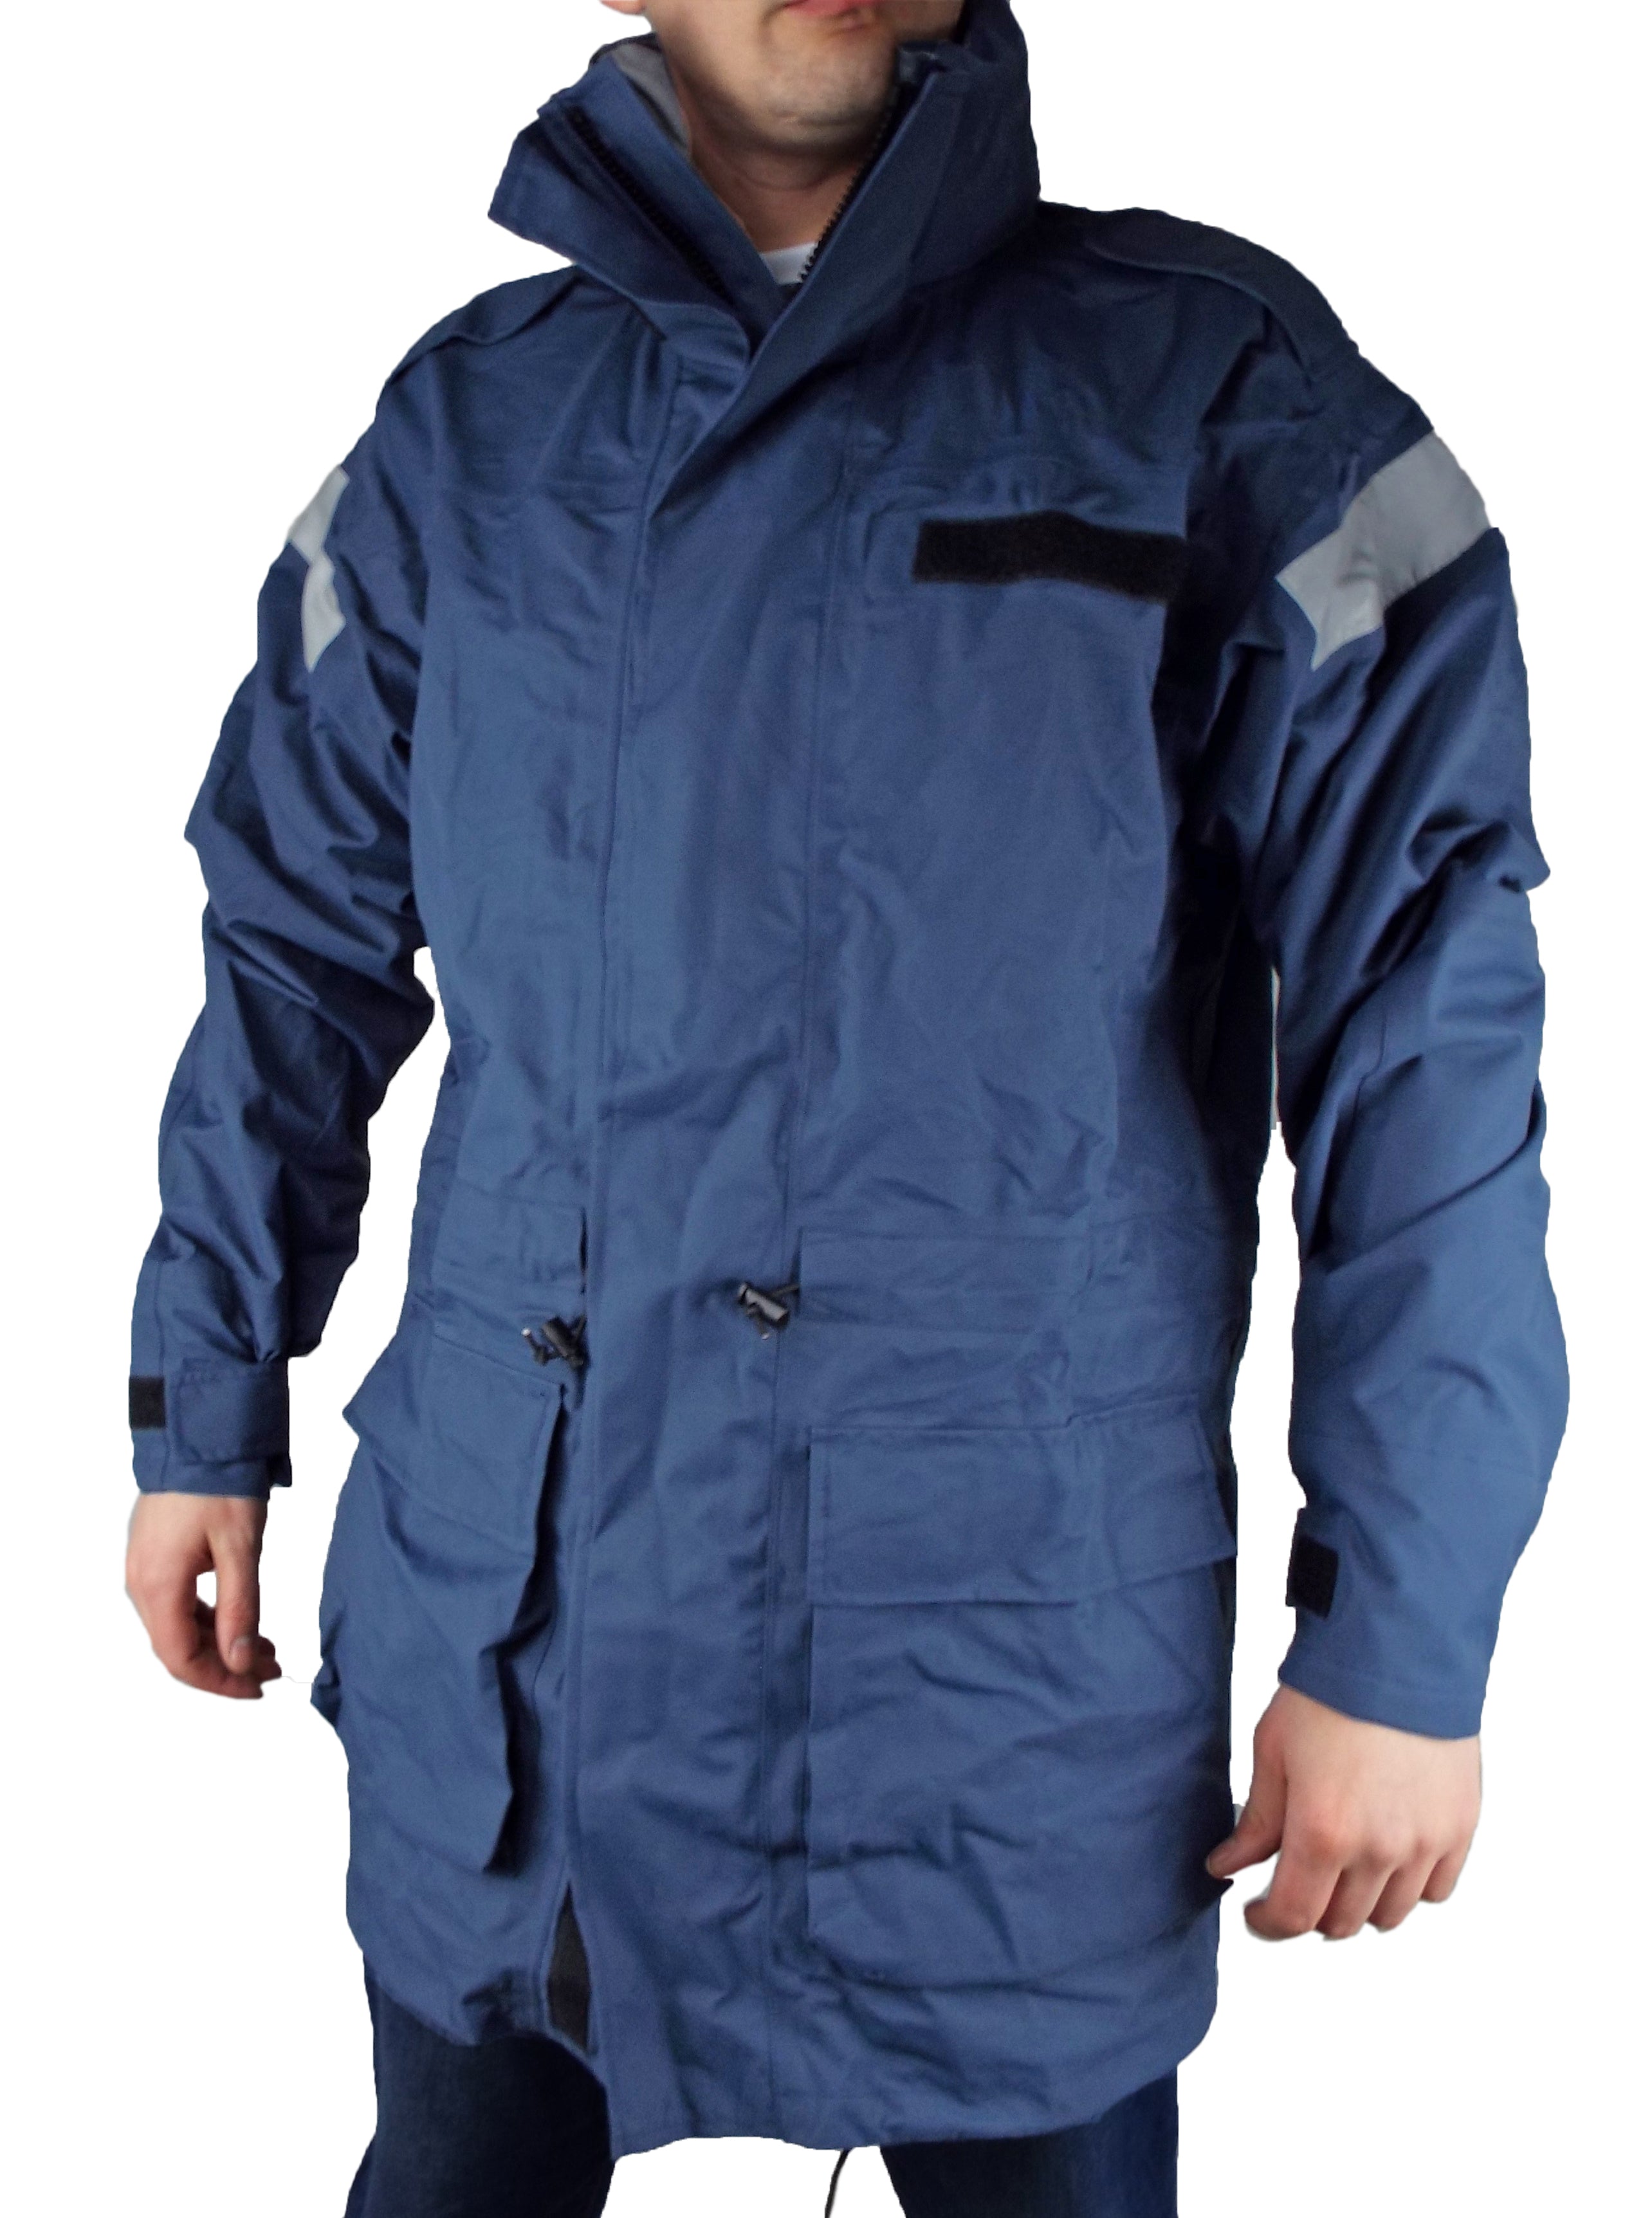 Blue RAF Gore-Tex Jacket - no hood - Forces Uniform and Kit